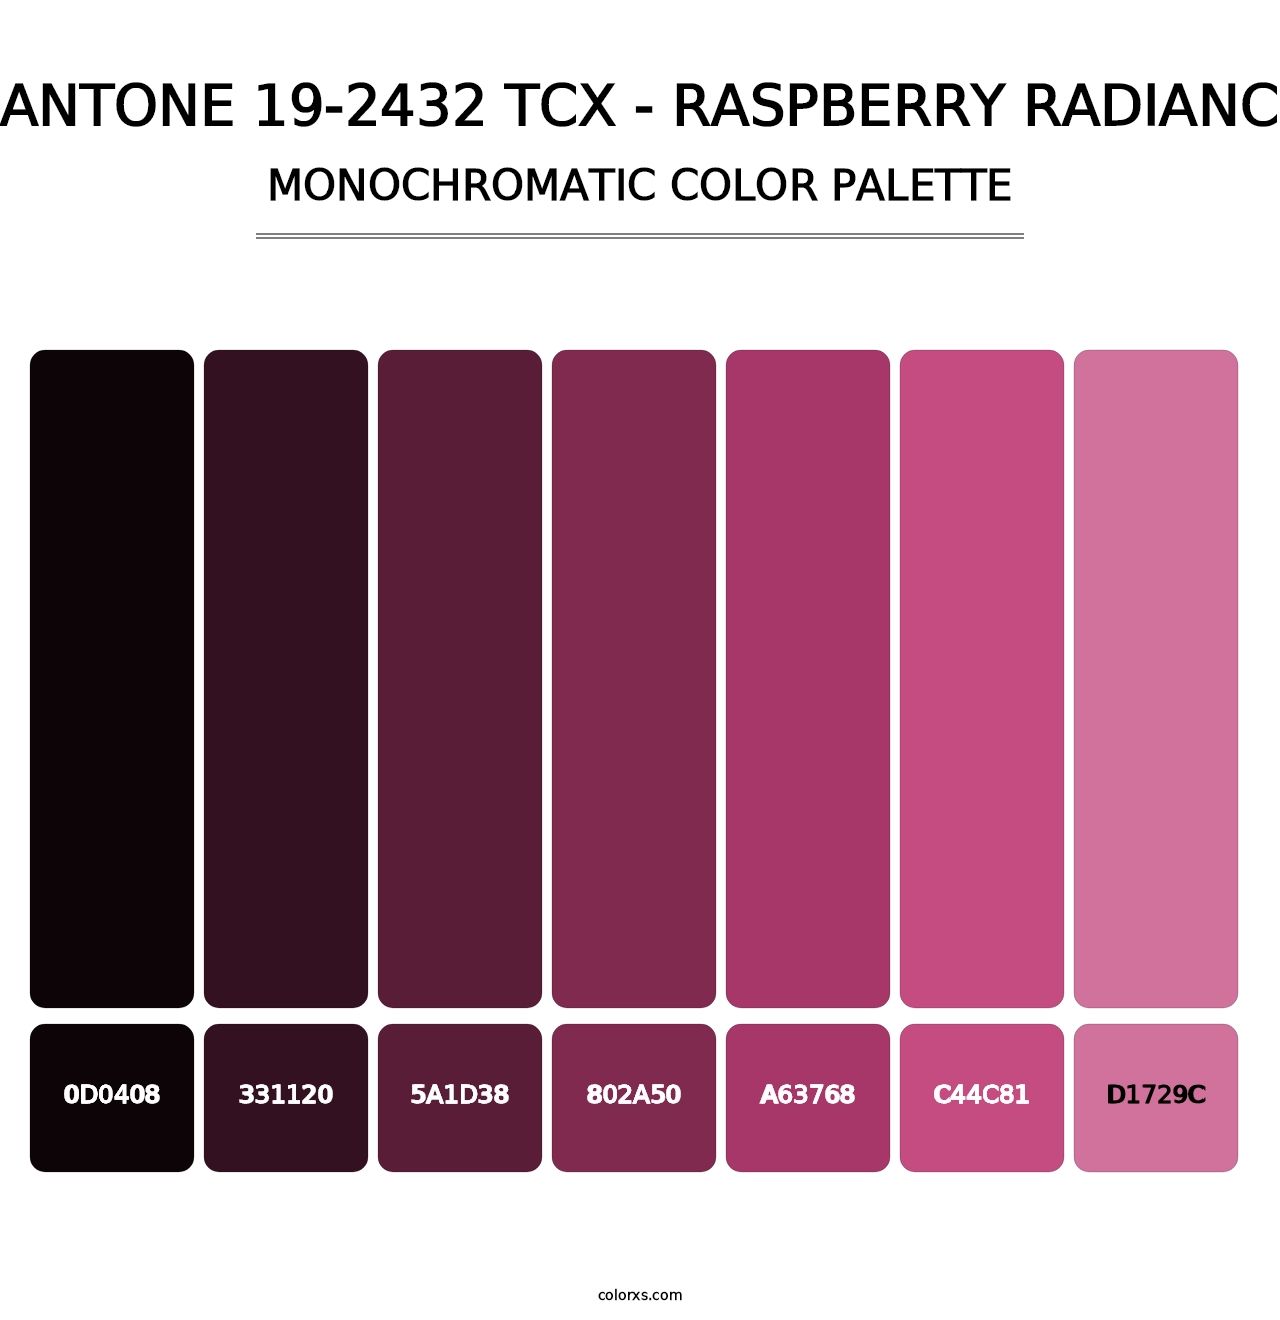 PANTONE 19-2432 TCX - Raspberry Radiance - Monochromatic Color Palette